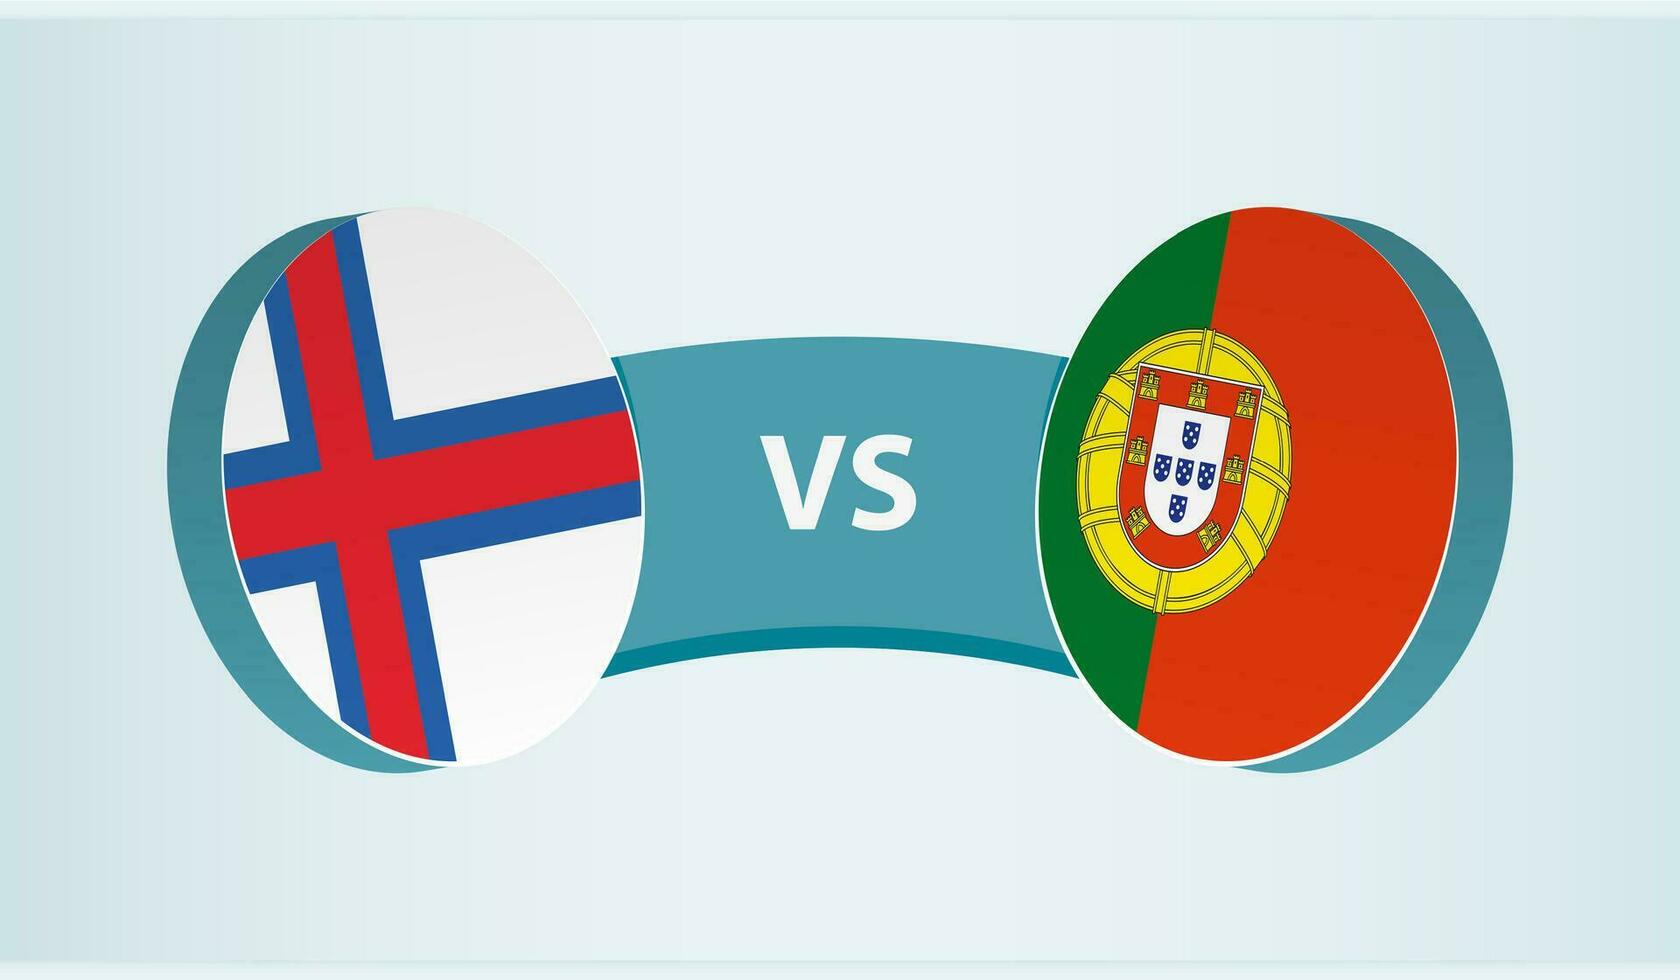 Faroe Islands versus Portugal, team sports competition concept. vector